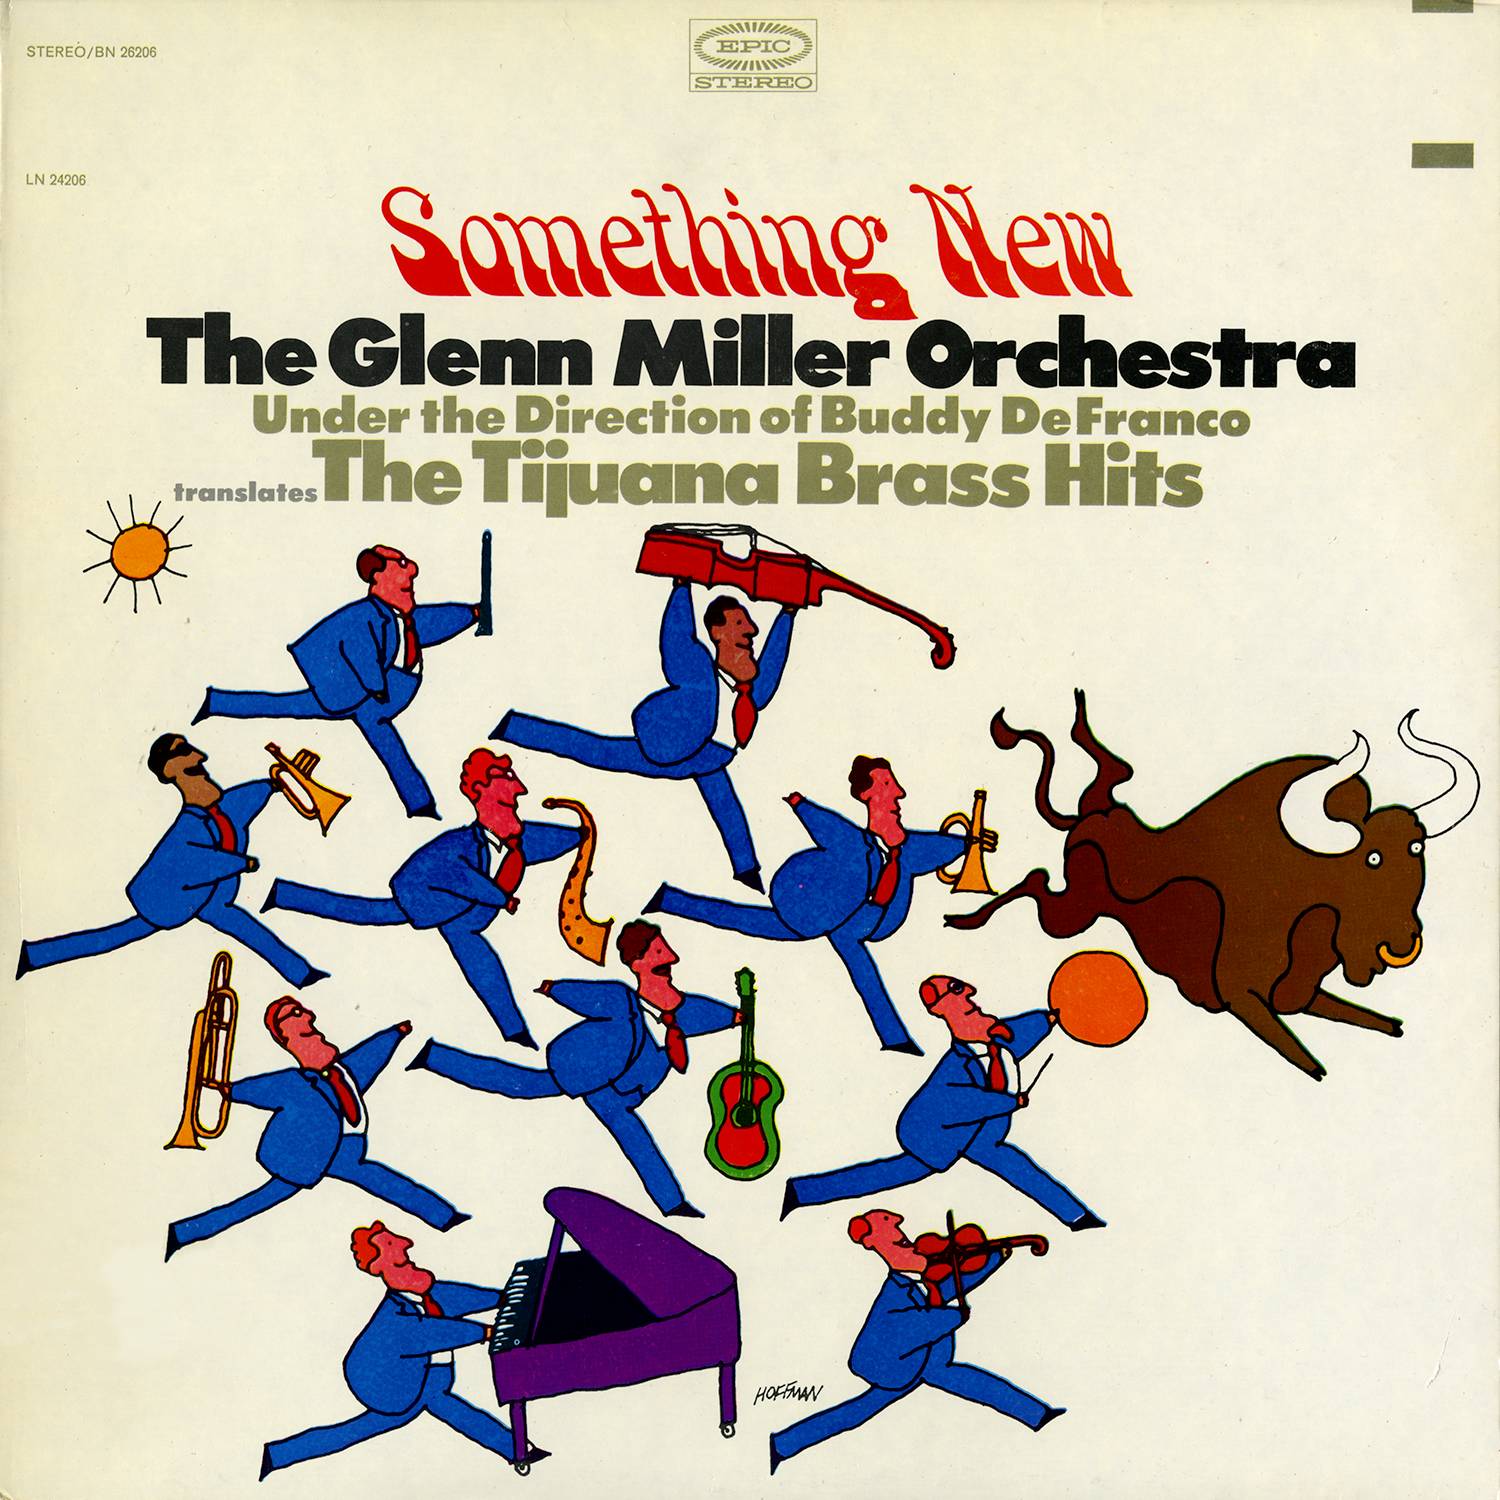 The Glenn Miller Orchestra - Something New (1966/2016) [AcousticSounds FLAC 24bit/192kHz]